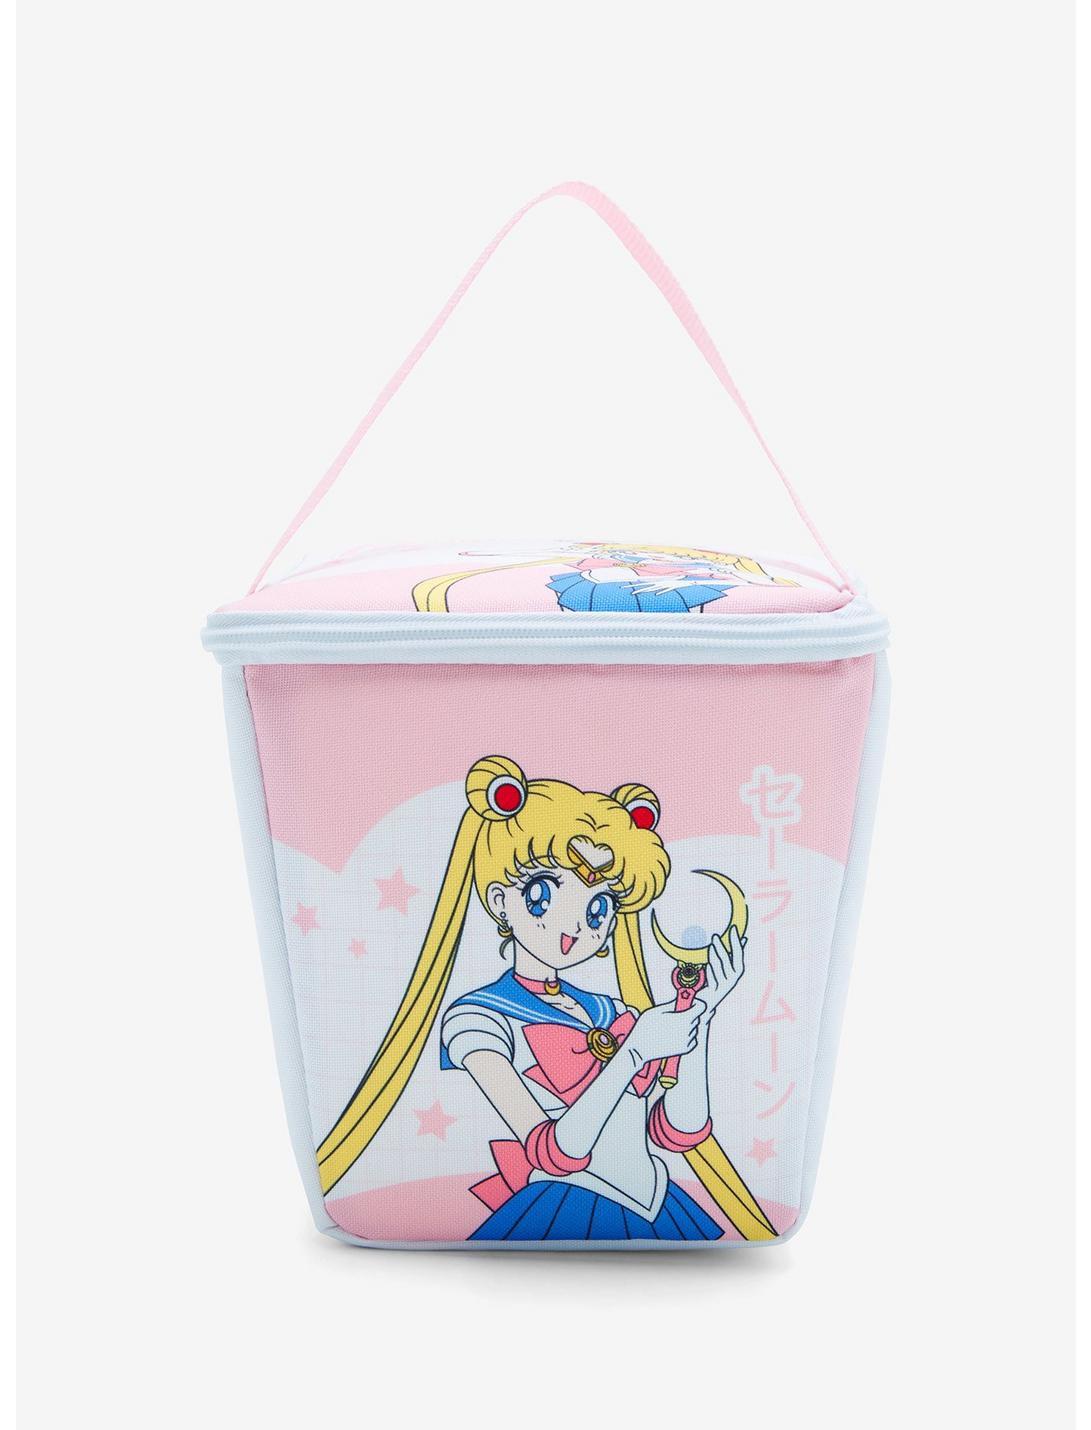 Sailor Moon Character Portrait Lunch Box